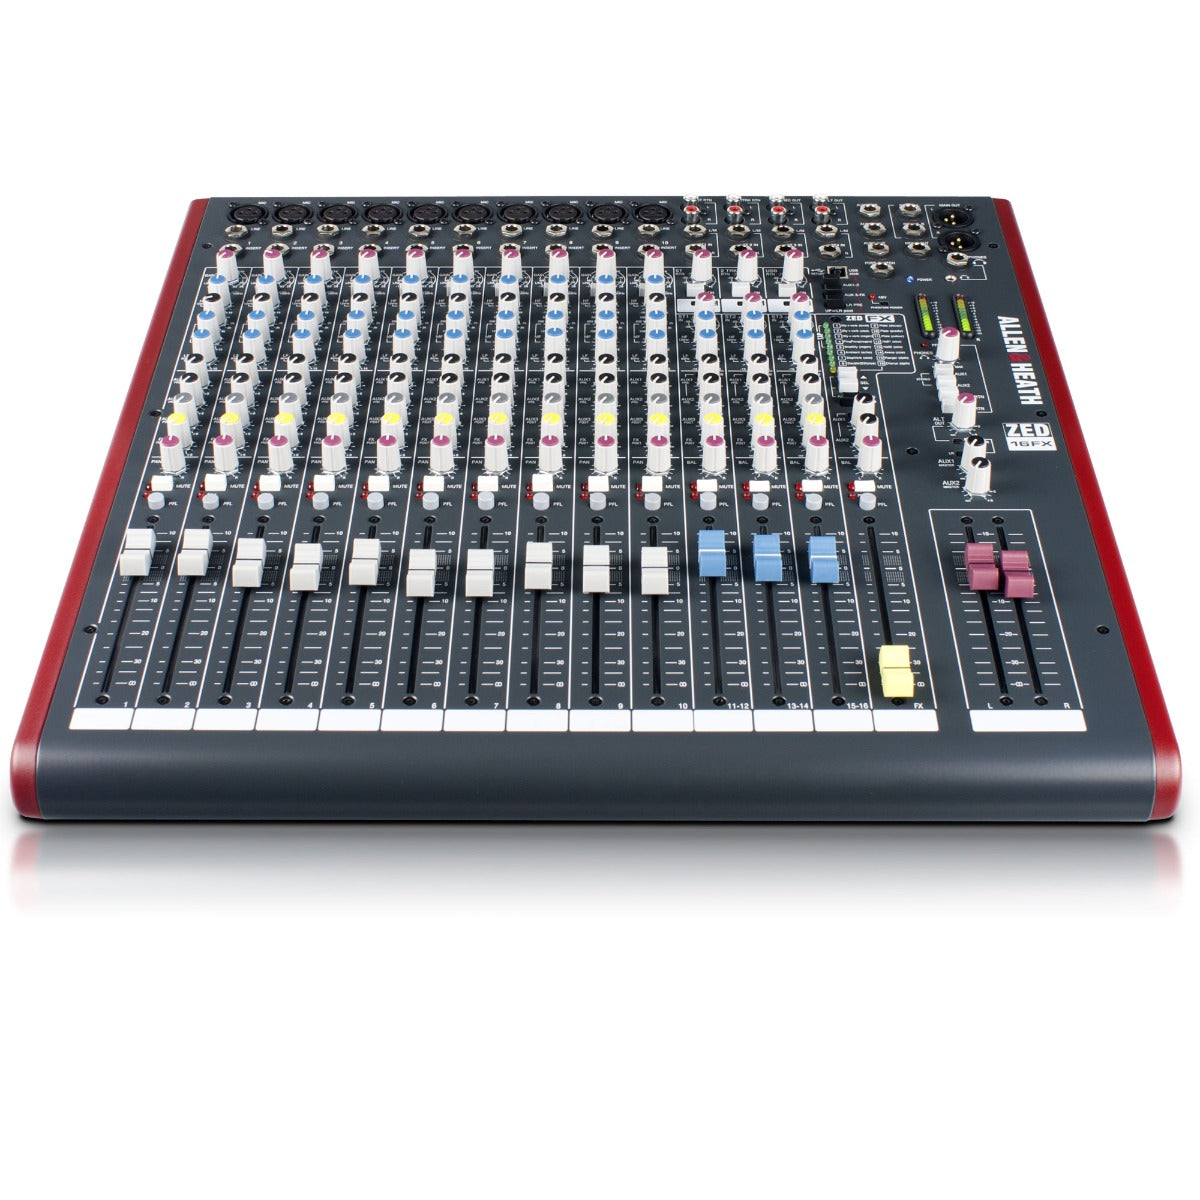 Allen & Heath 14-channel mixer with built-in effects